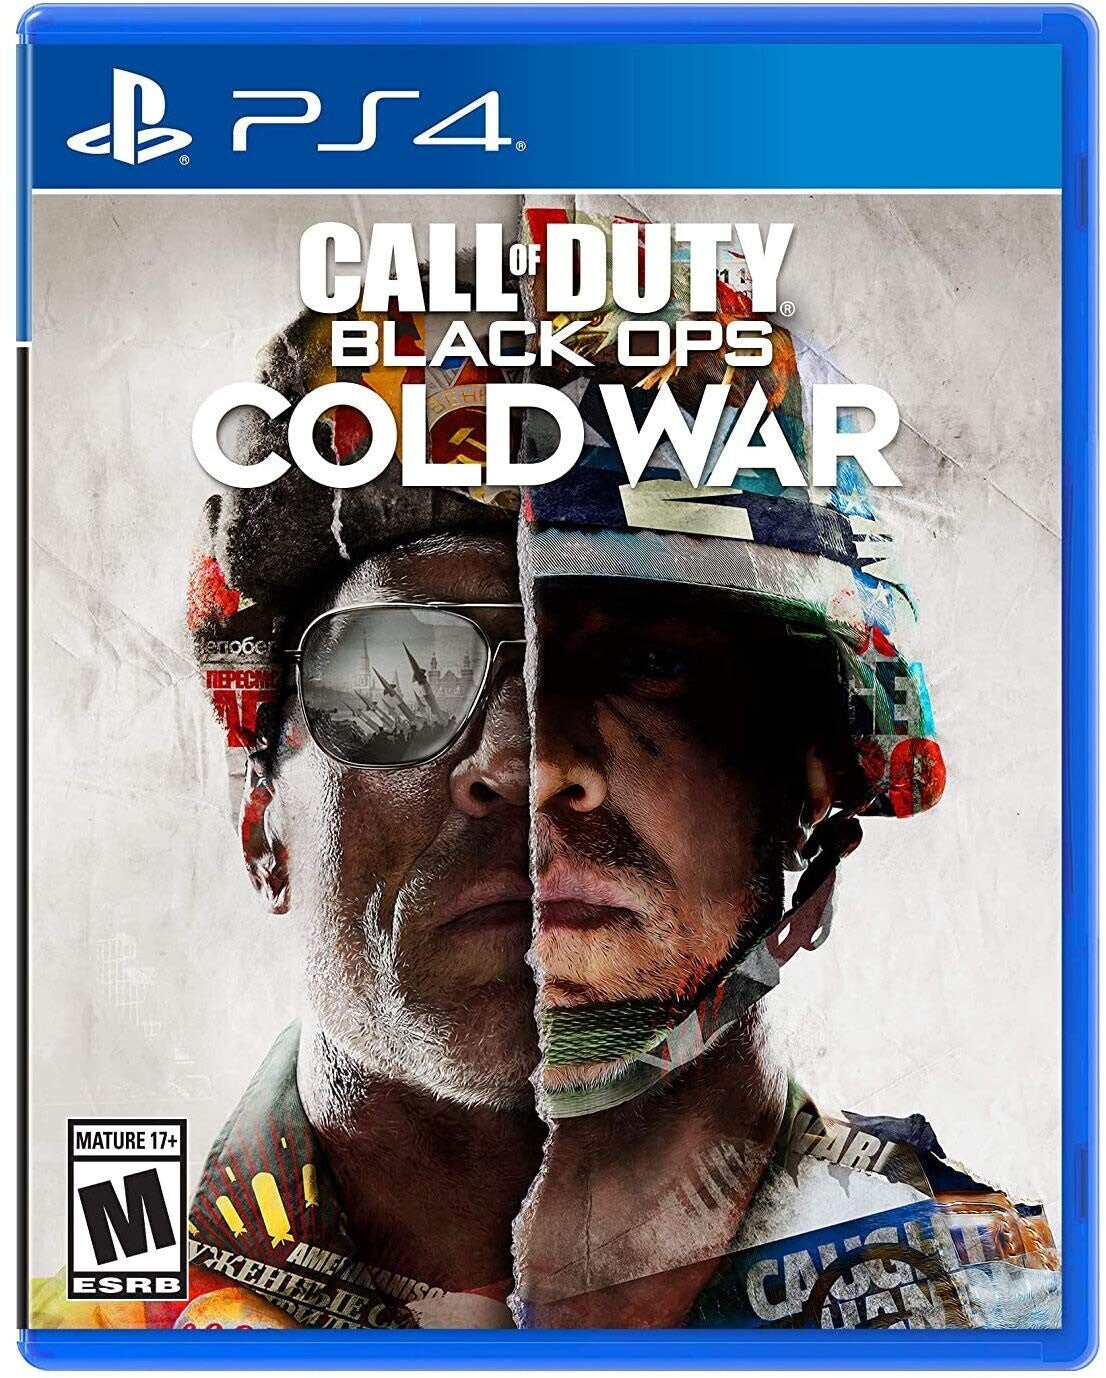 PS4 CALL OF DUTY BLACK OPS COLD WAR - USADO